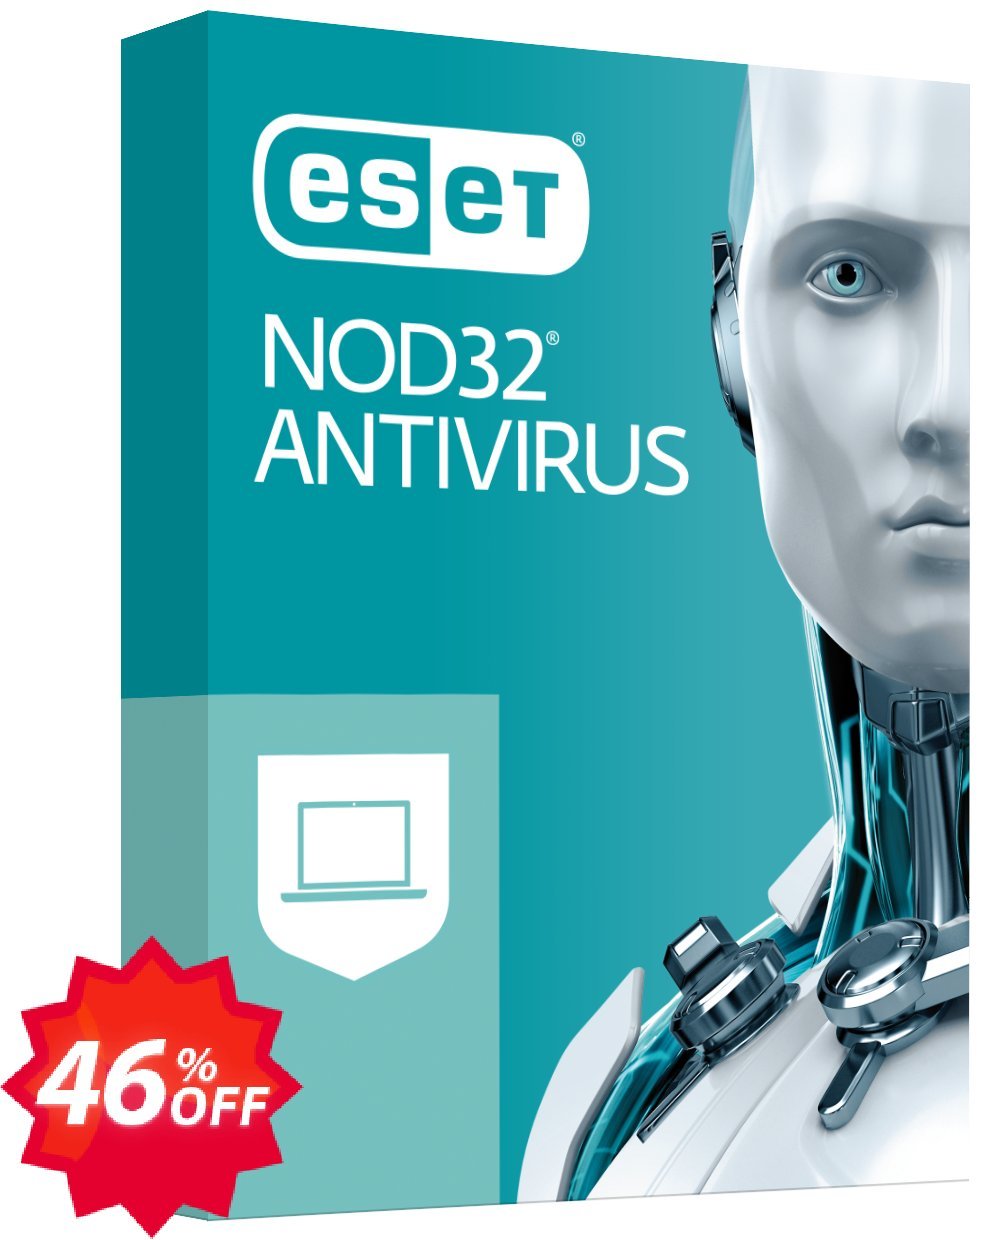 ESET NOD32 Antivirus - Renew 2 Years 2 Devices Coupon code 46% discount 